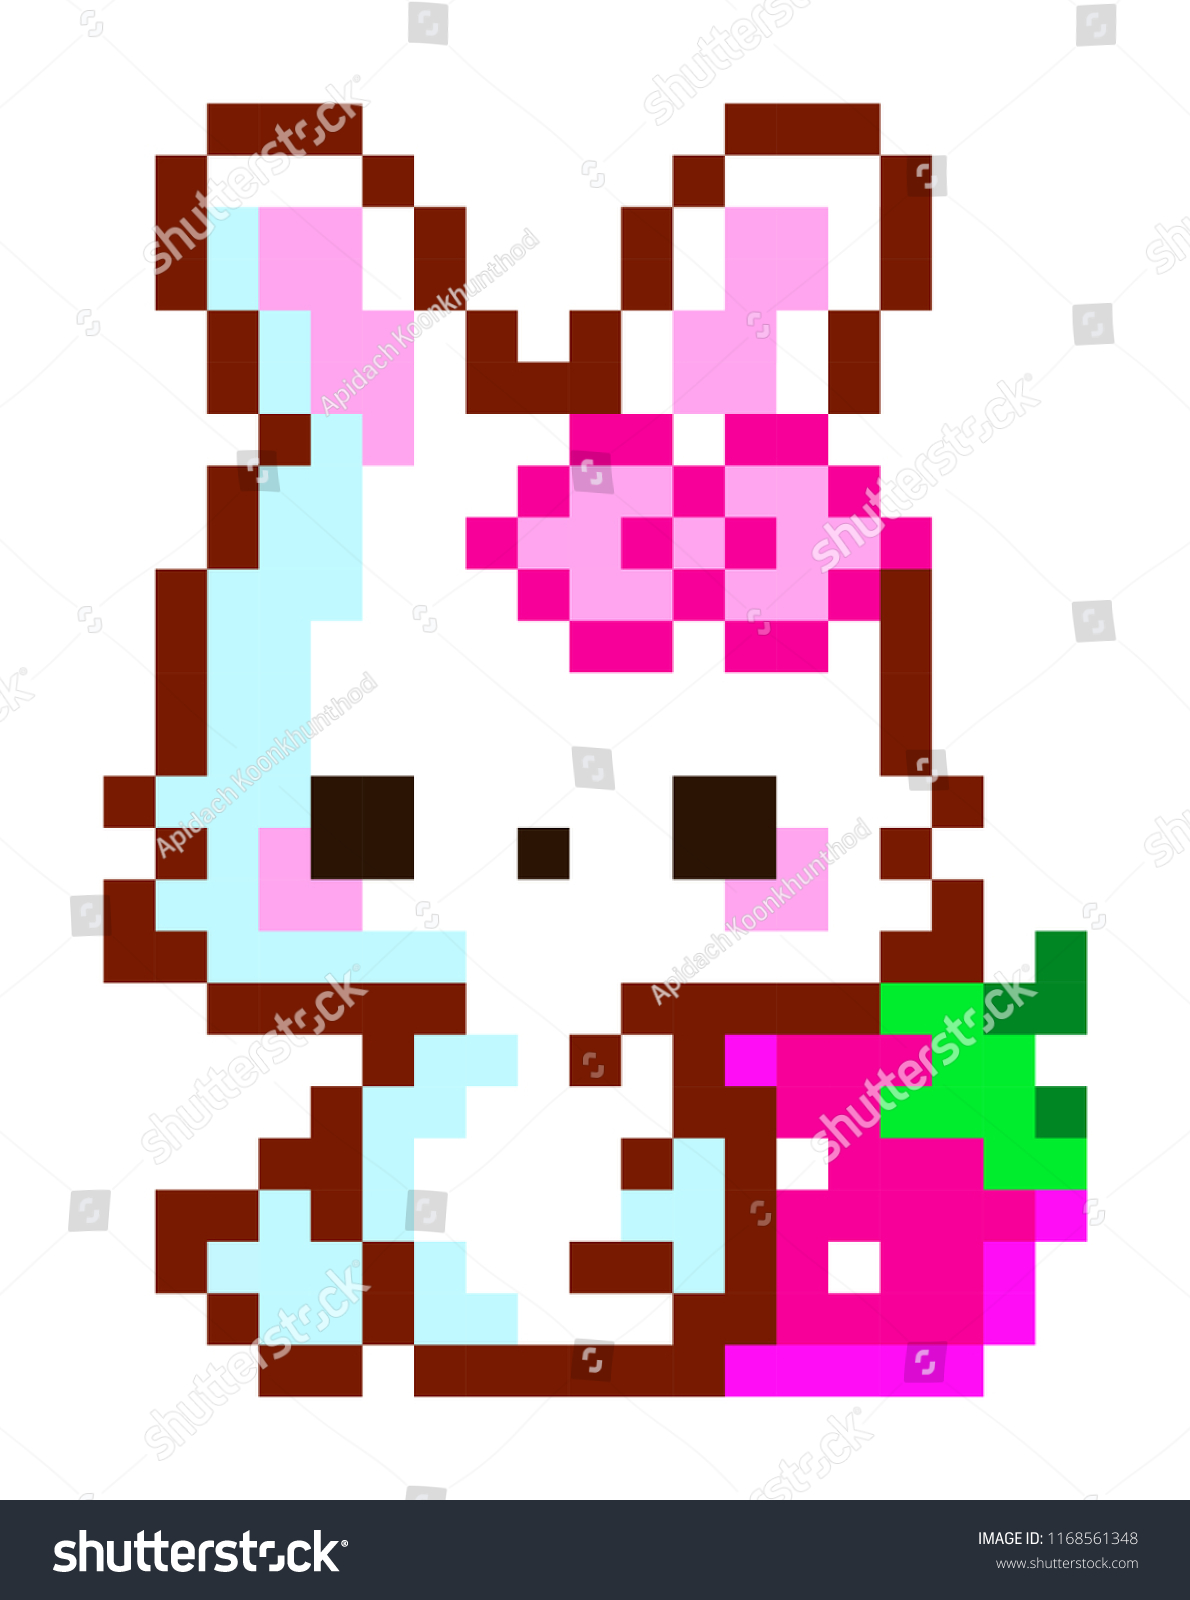 Cute Pixel Art Bunny Grid - Pixel Art Grid Gallery